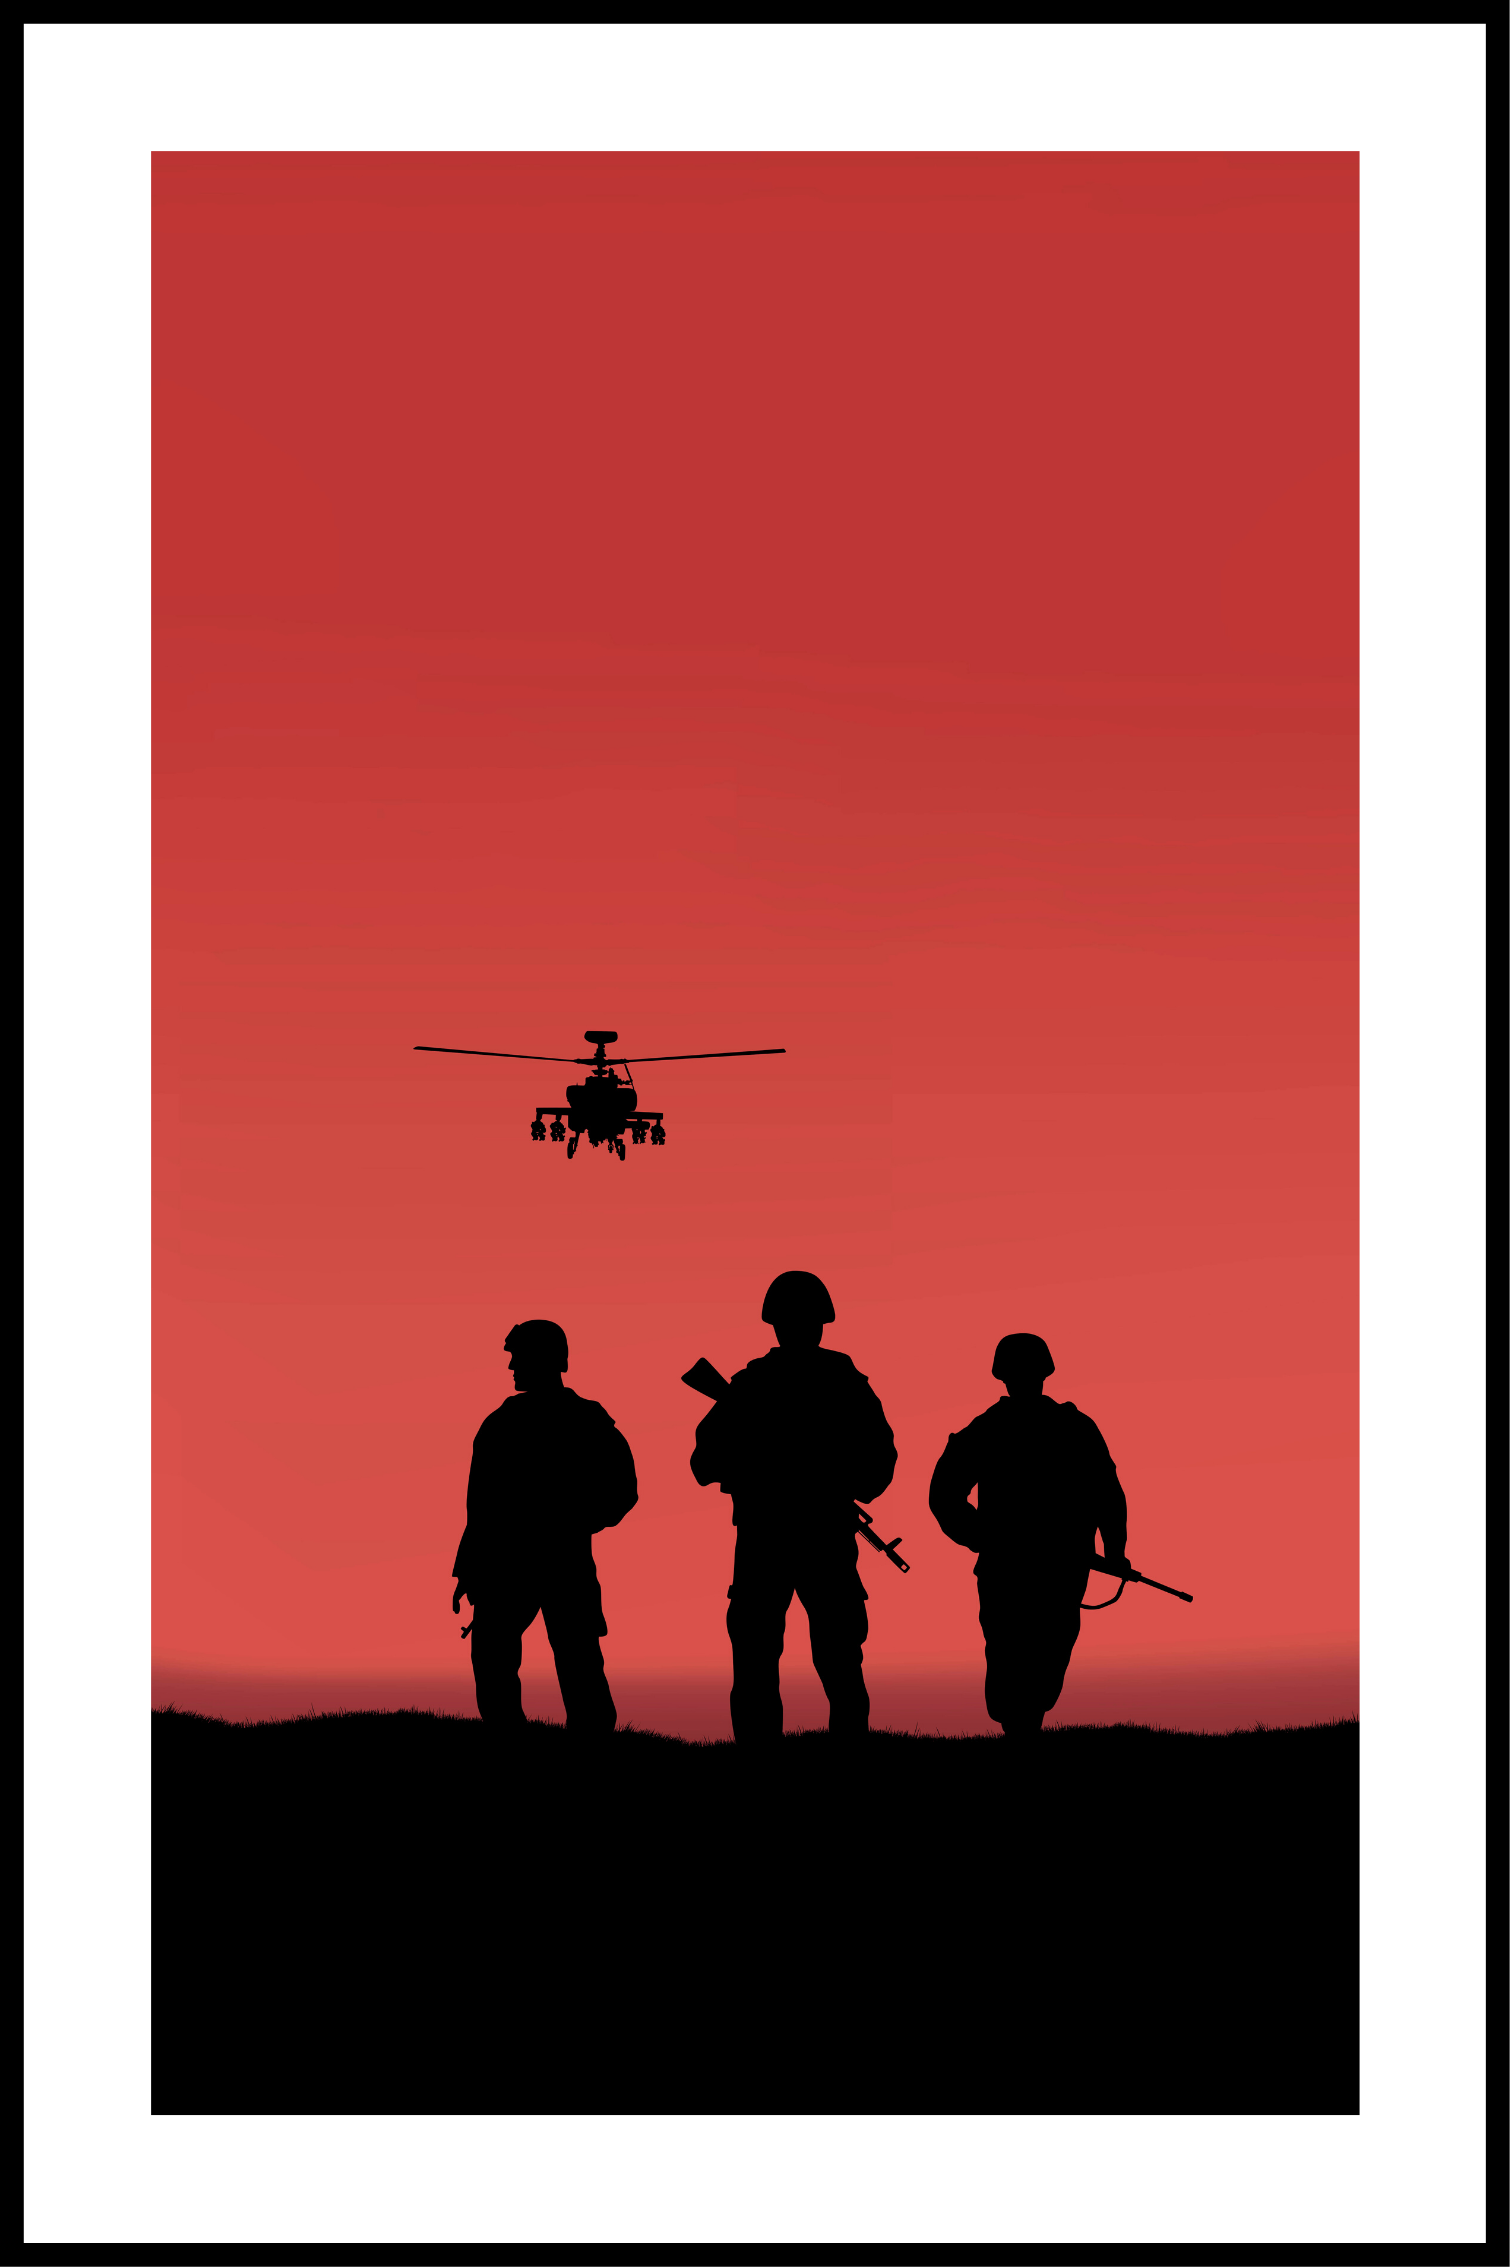 affisch för soldater i krig